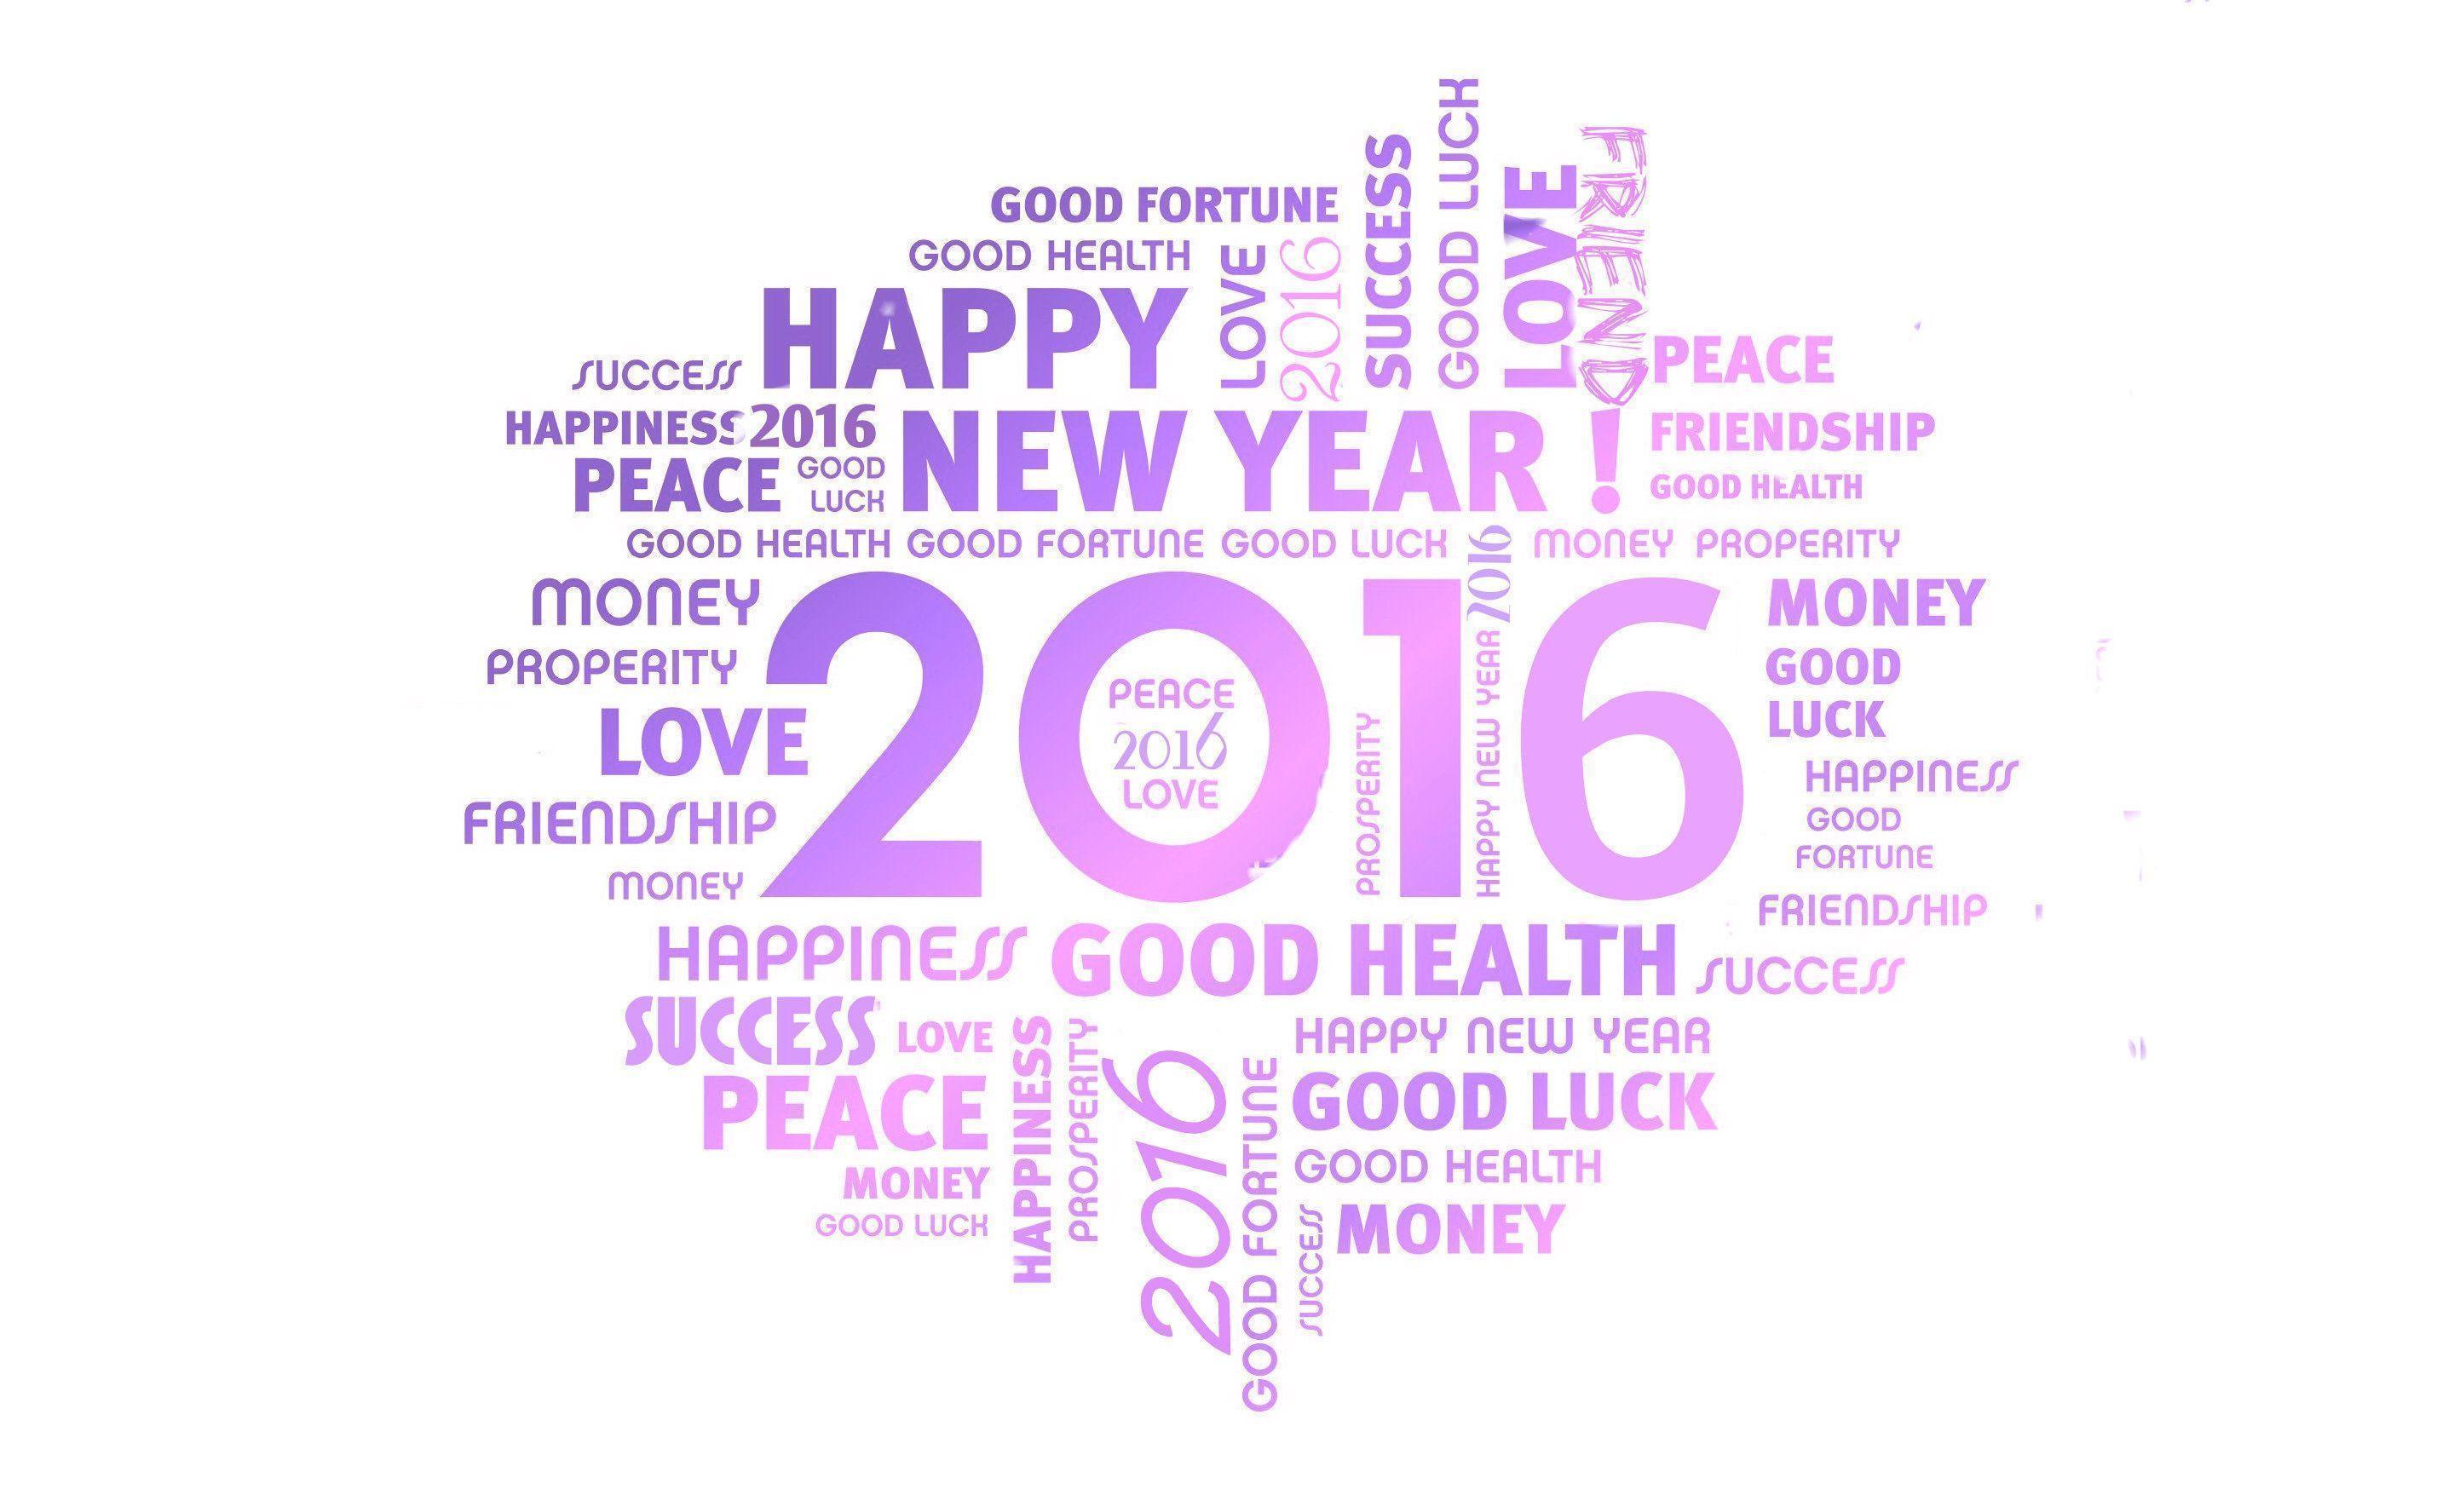 Happy New Year 2016 HD Wallpaper Image Greetings pics